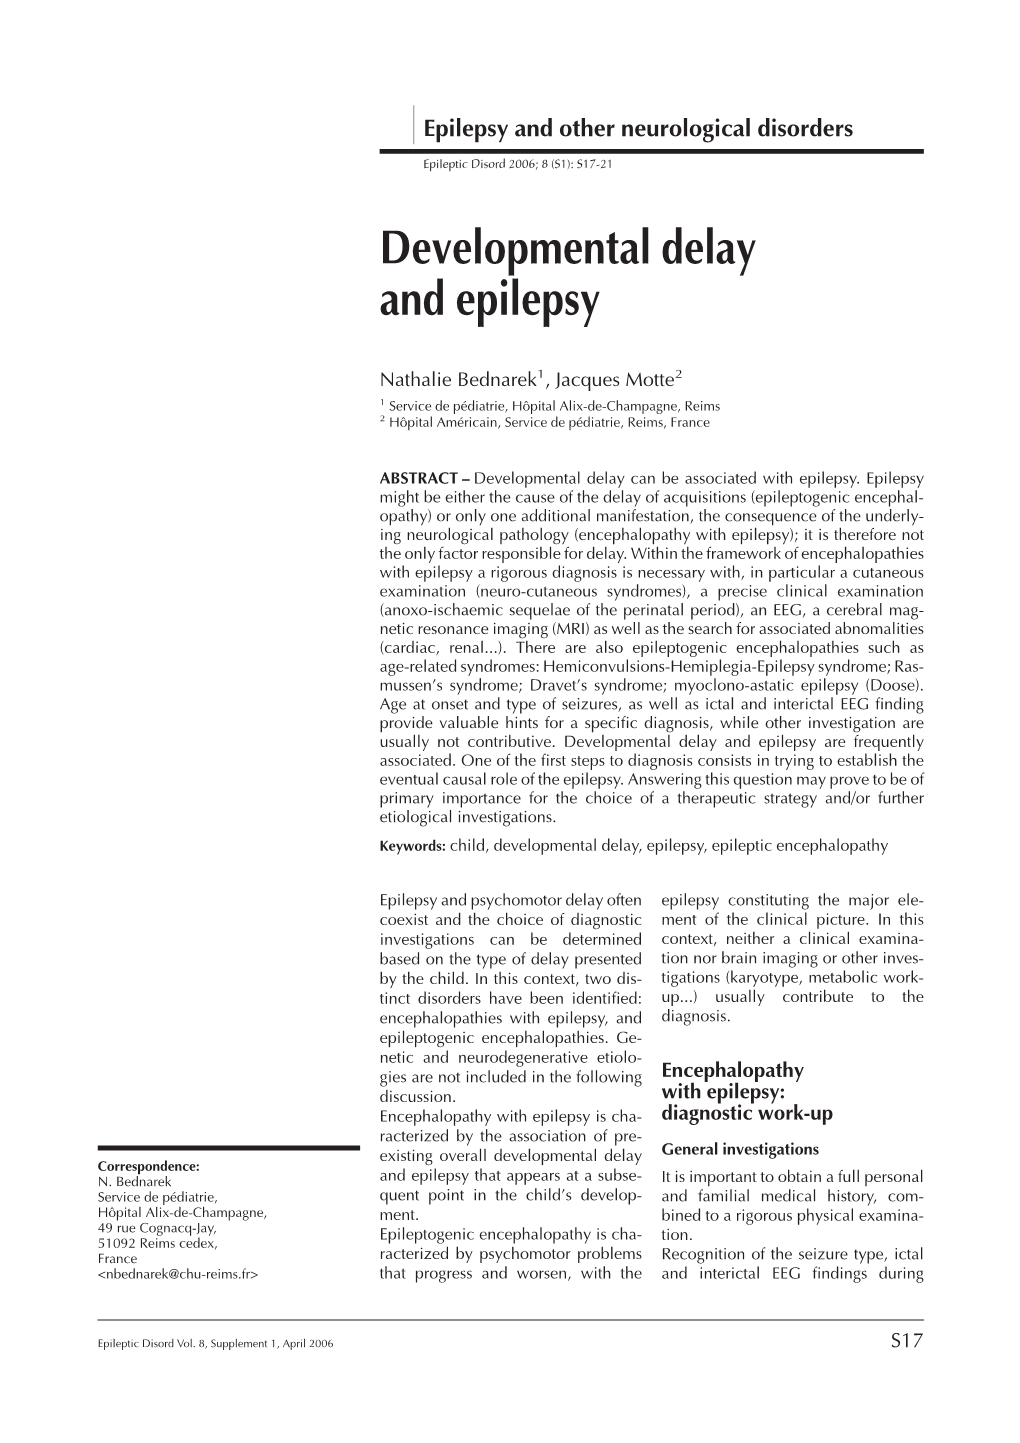 Developmental Delay and Epilepsy